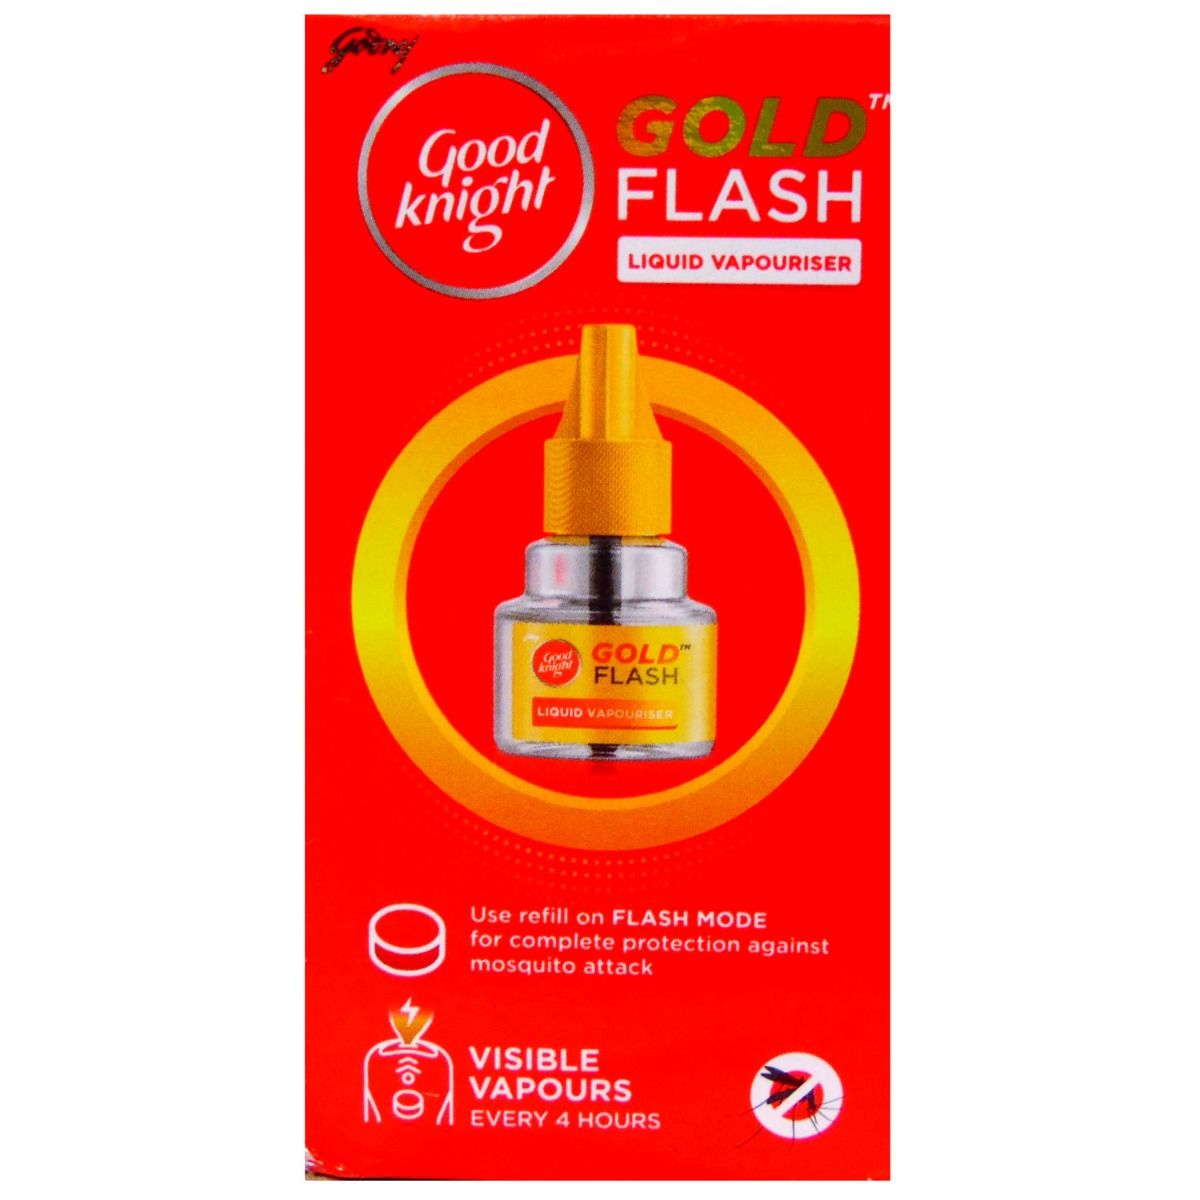 Good Knight Gold Flash Liquid Vapouriser, 45 ml, Pack of 1 